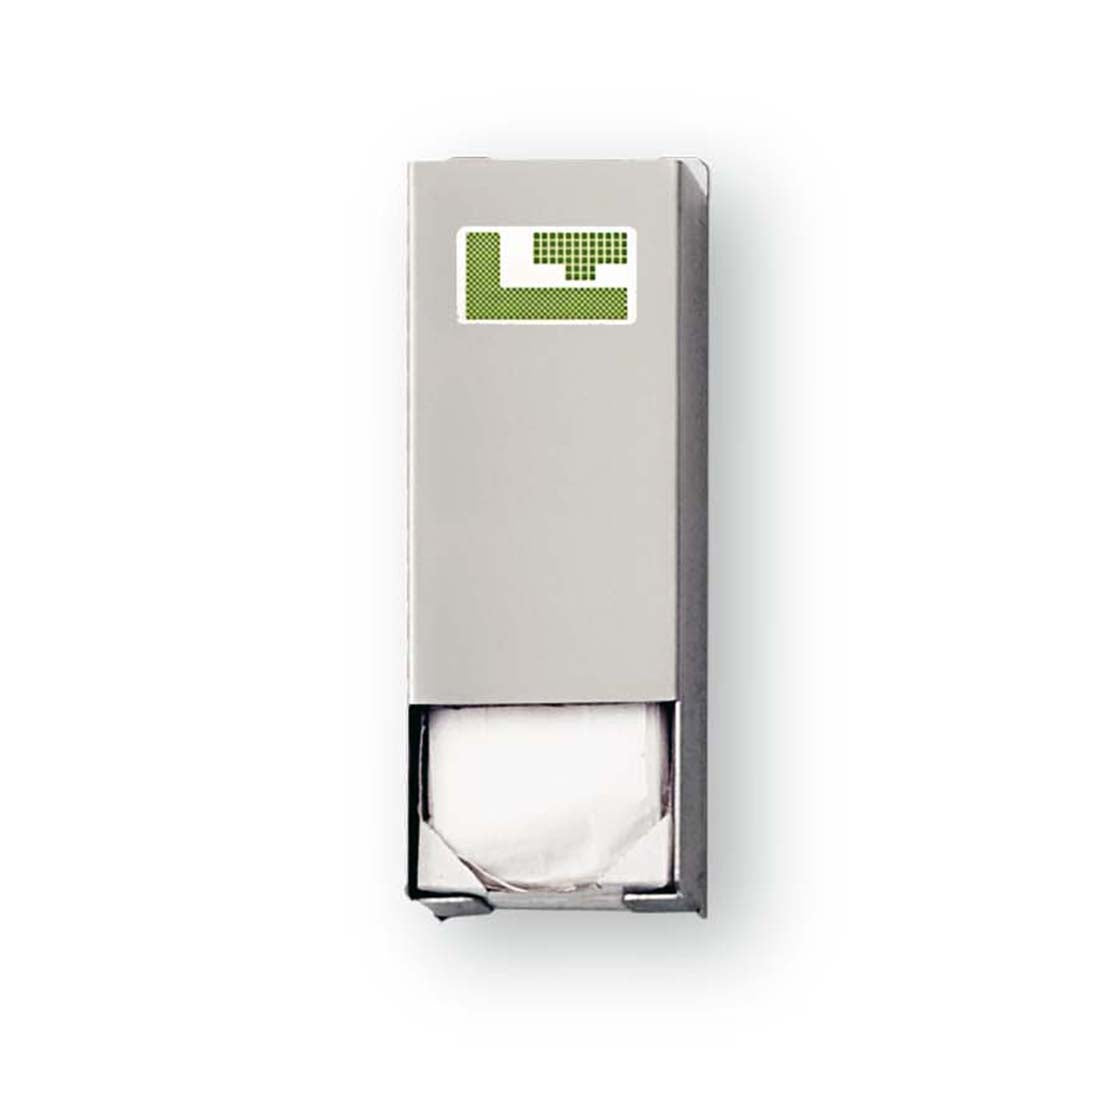 Louis Tellier Dispenser Box For Disposable Masks B1010